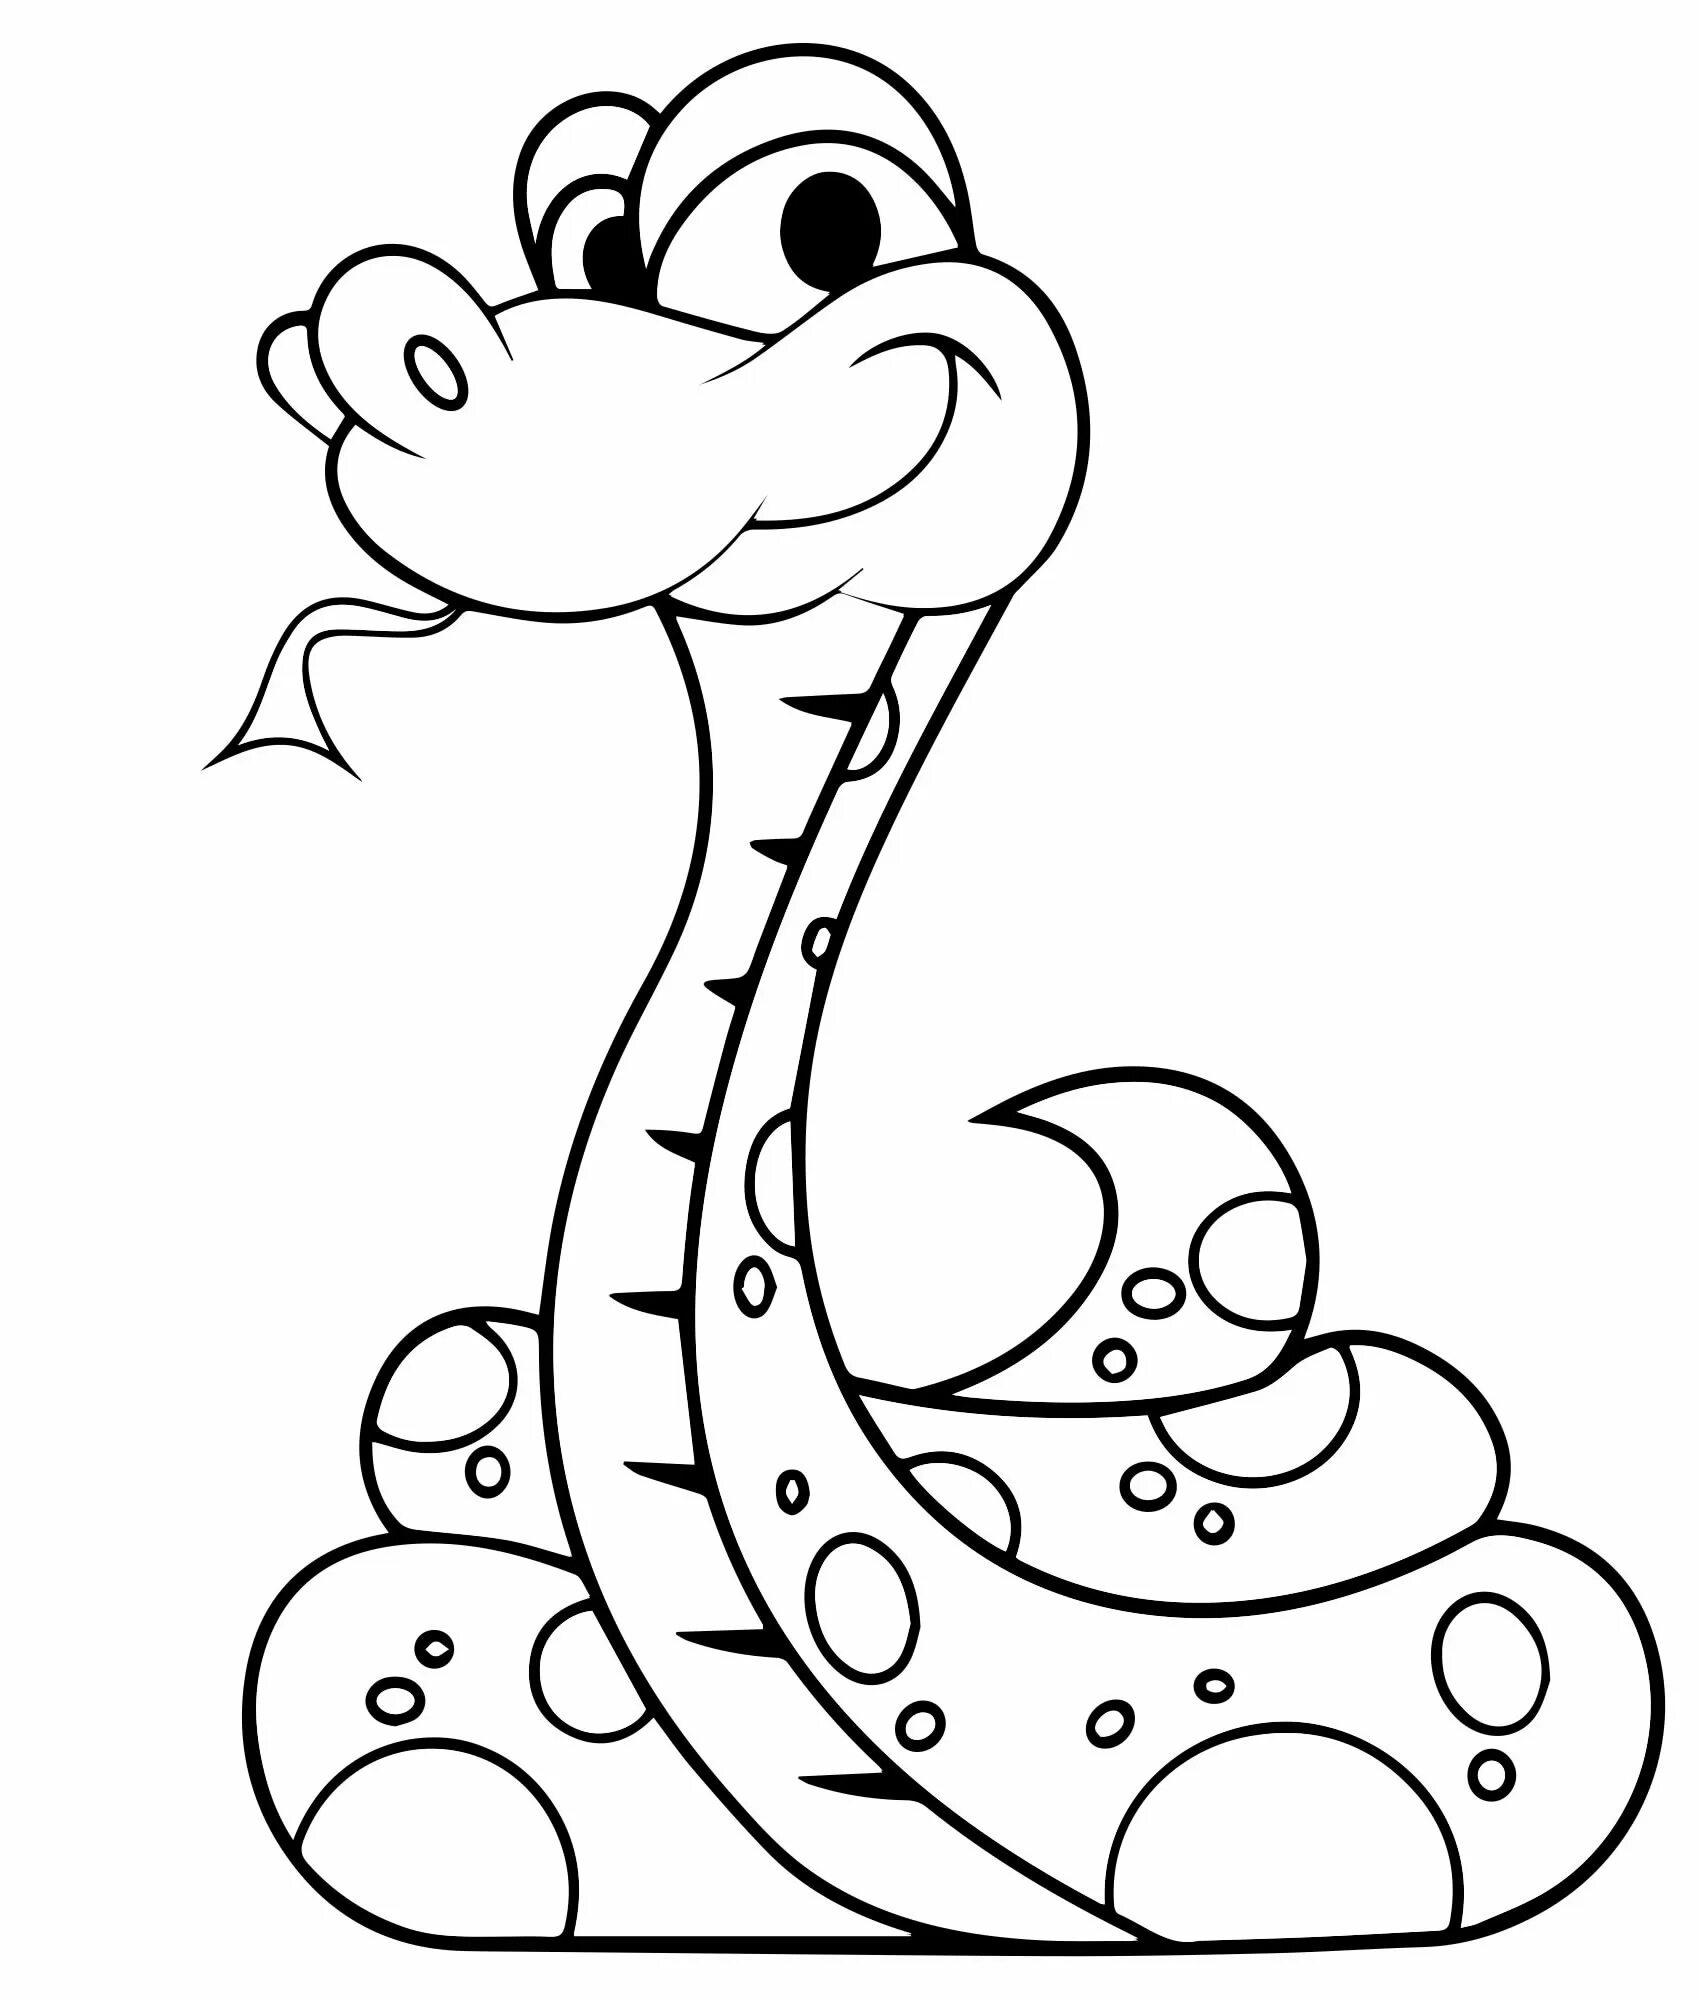 Змея раскраска. Змея раскраска для детей. Змея картинка раскраска. Змея картинка для детей раскраска. Раскраска змей для детей